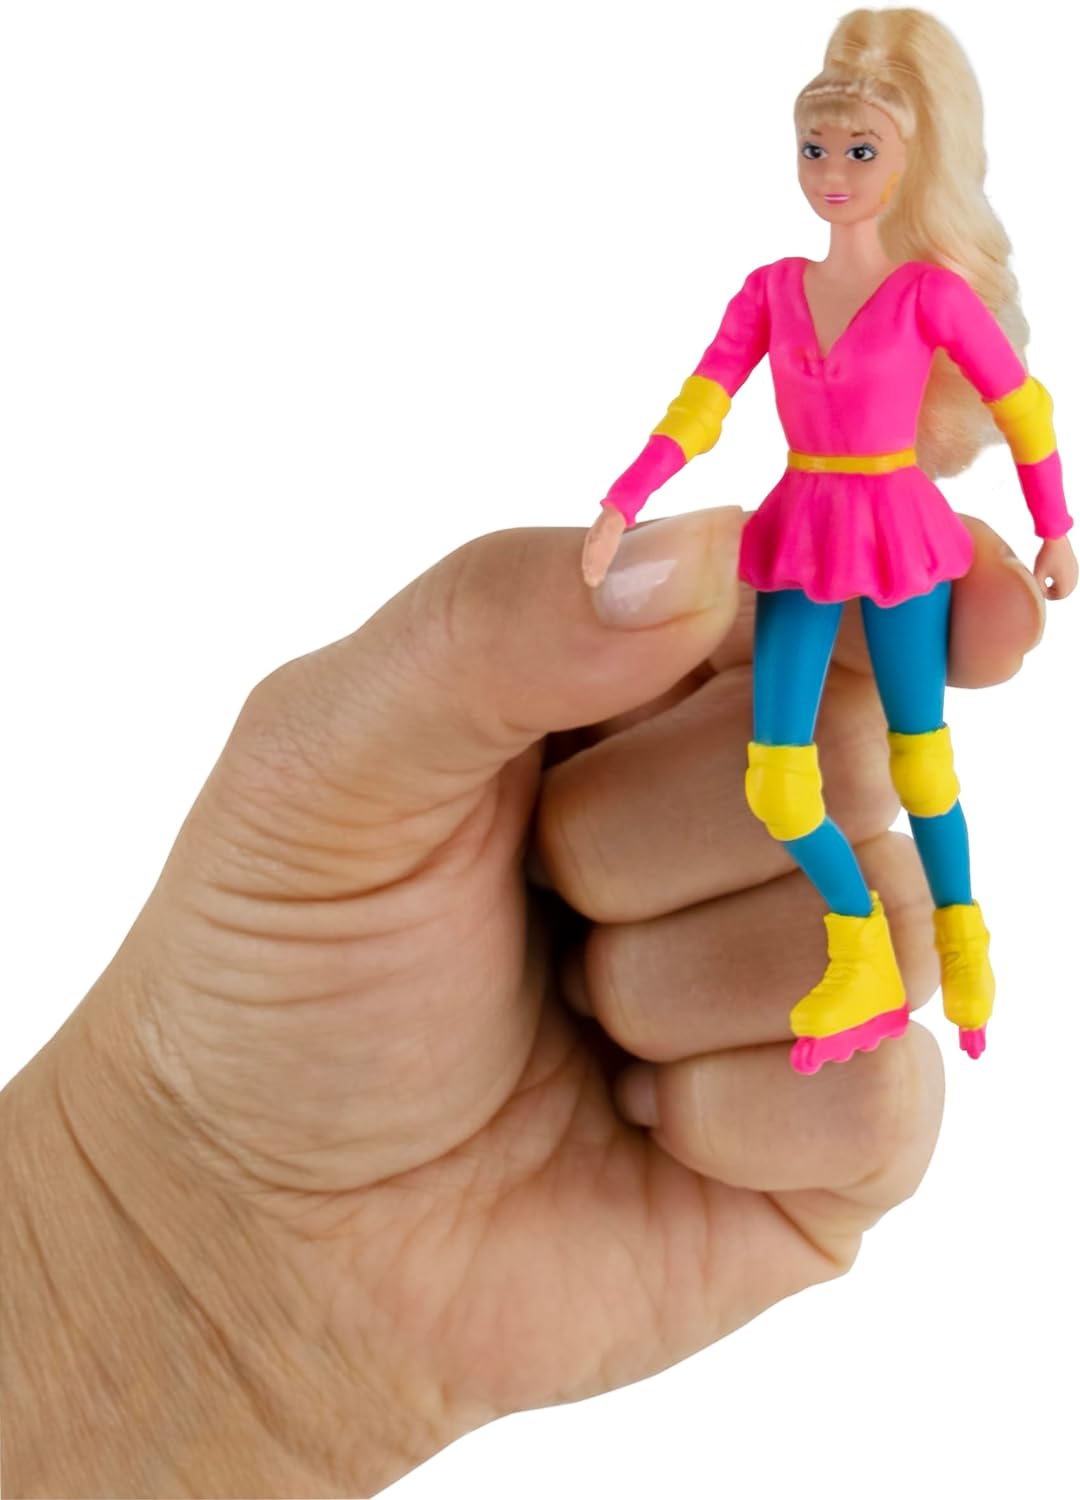 World's Smallest Barbie